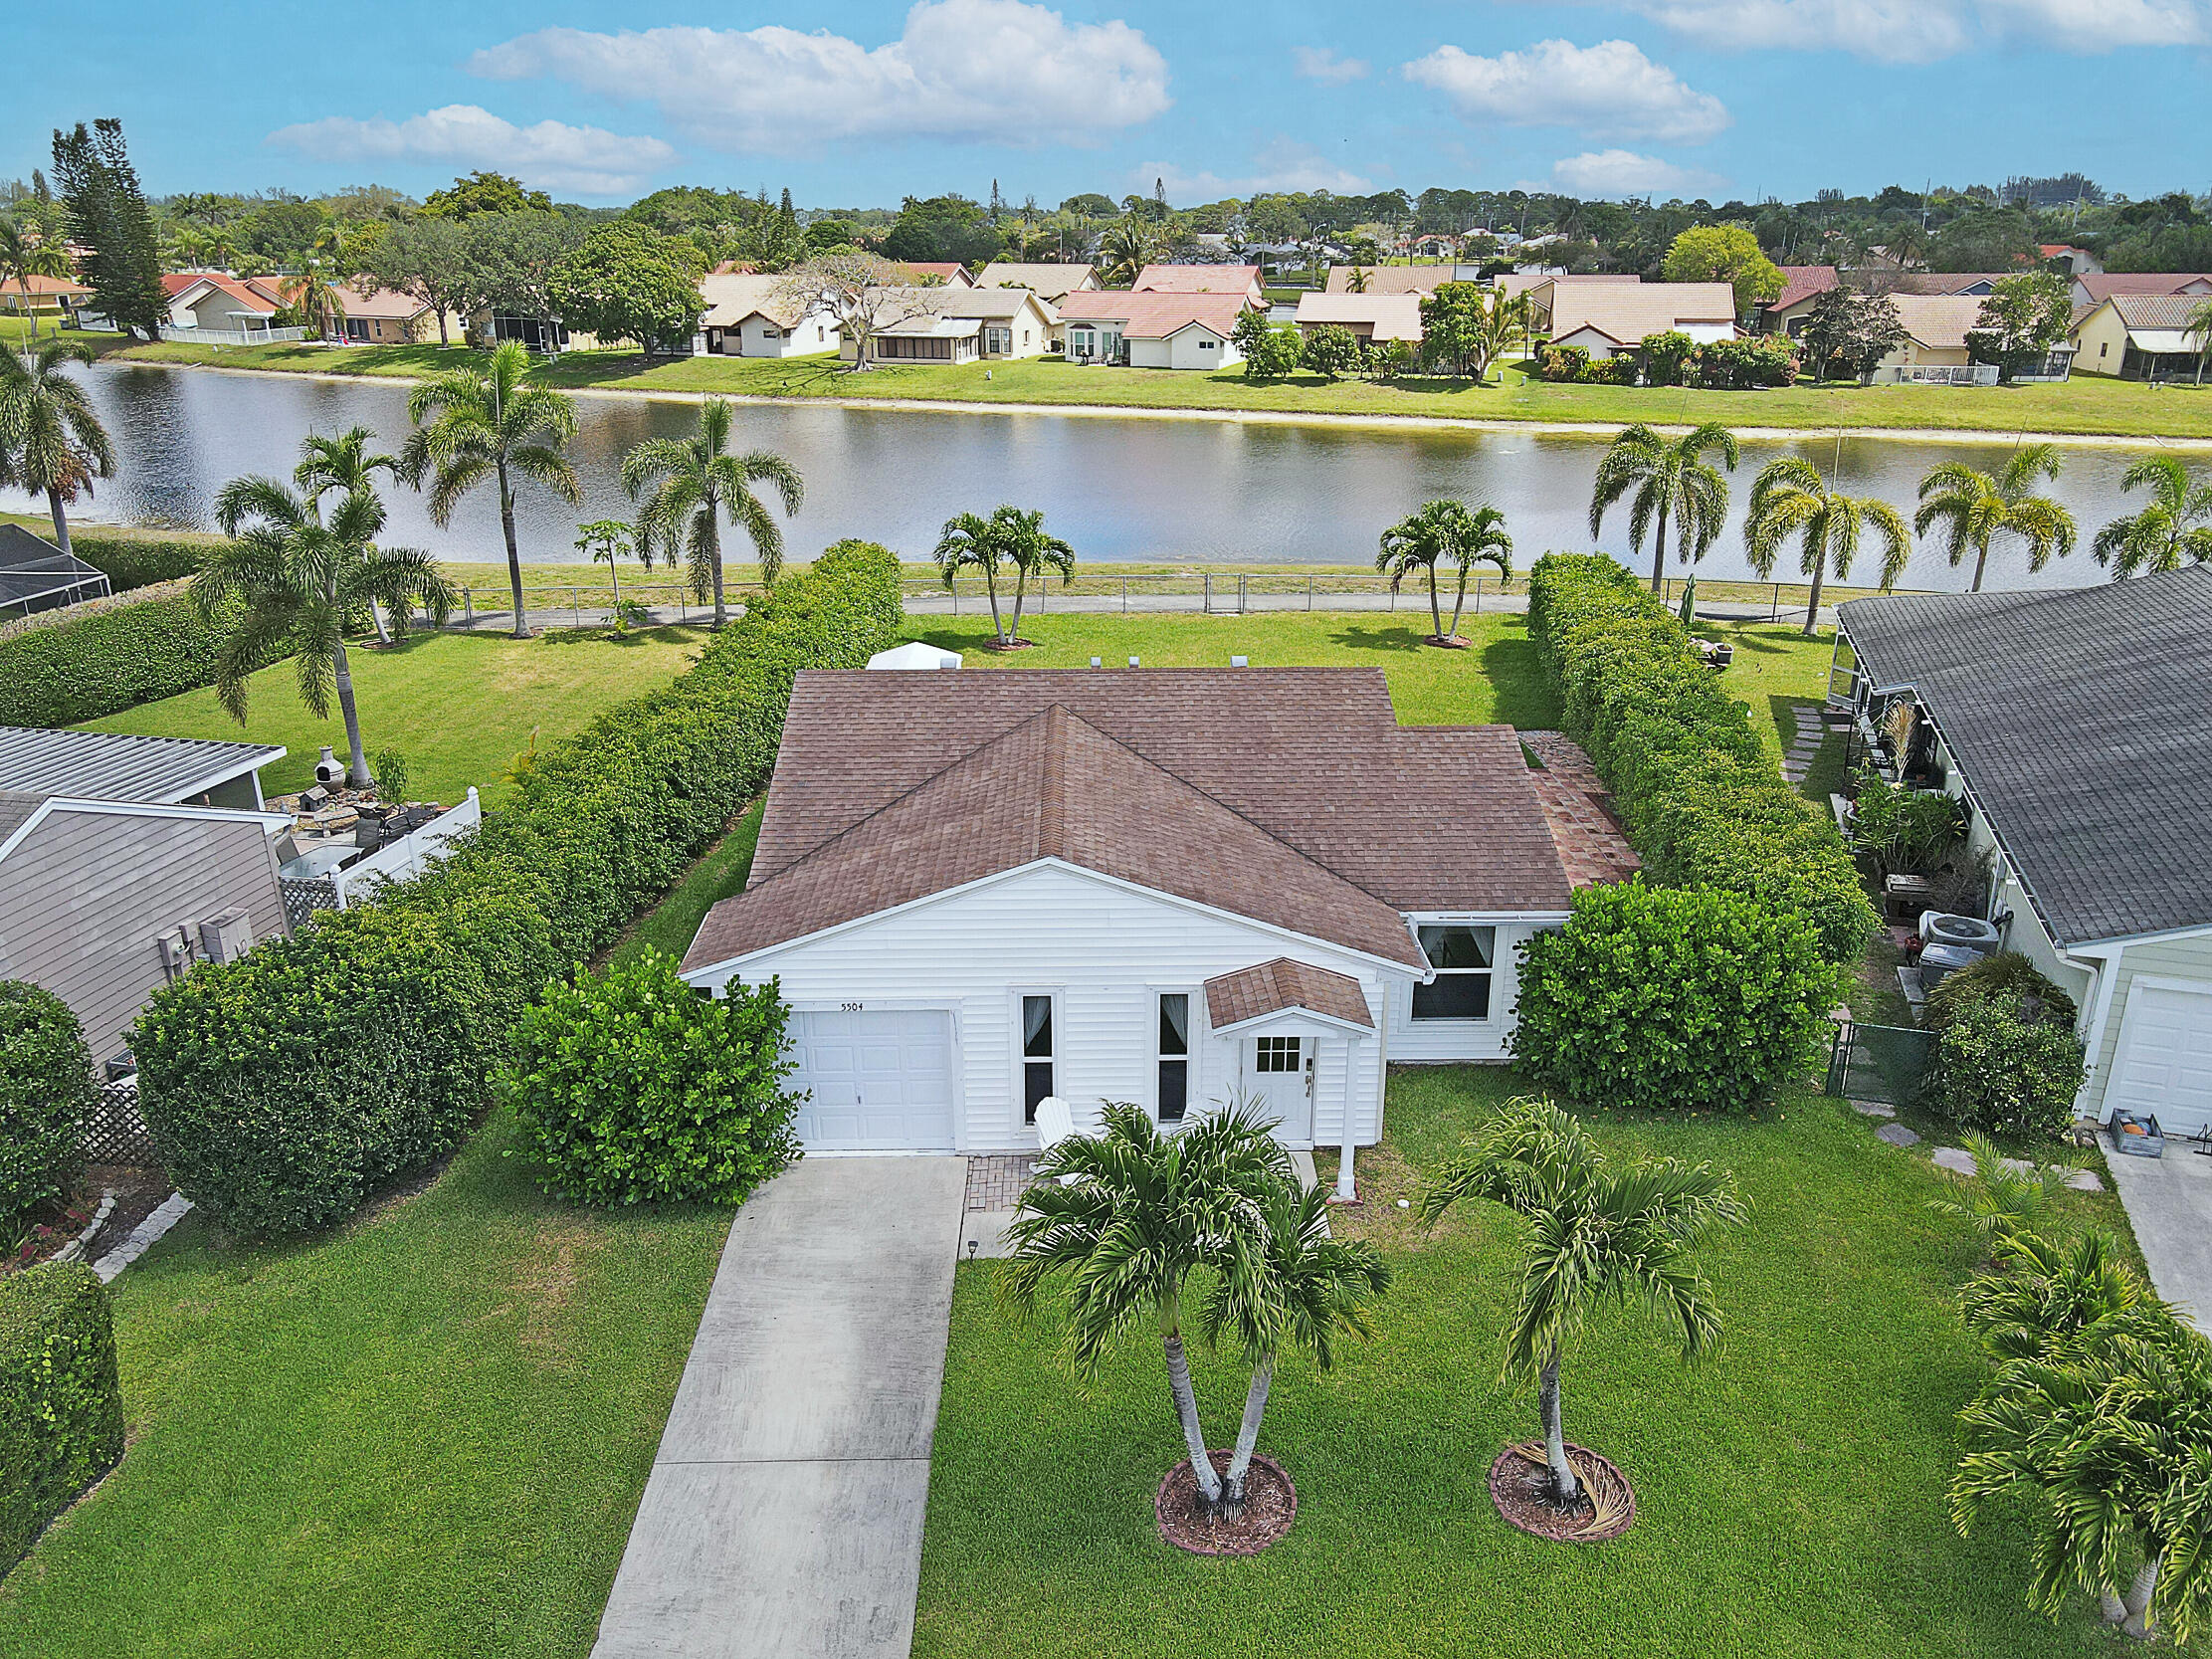 Property for Sale at 5504 Courtney Circle, Boynton Beach, Palm Beach County, Florida - Bedrooms: 2 
Bathrooms: 2  - $415,000